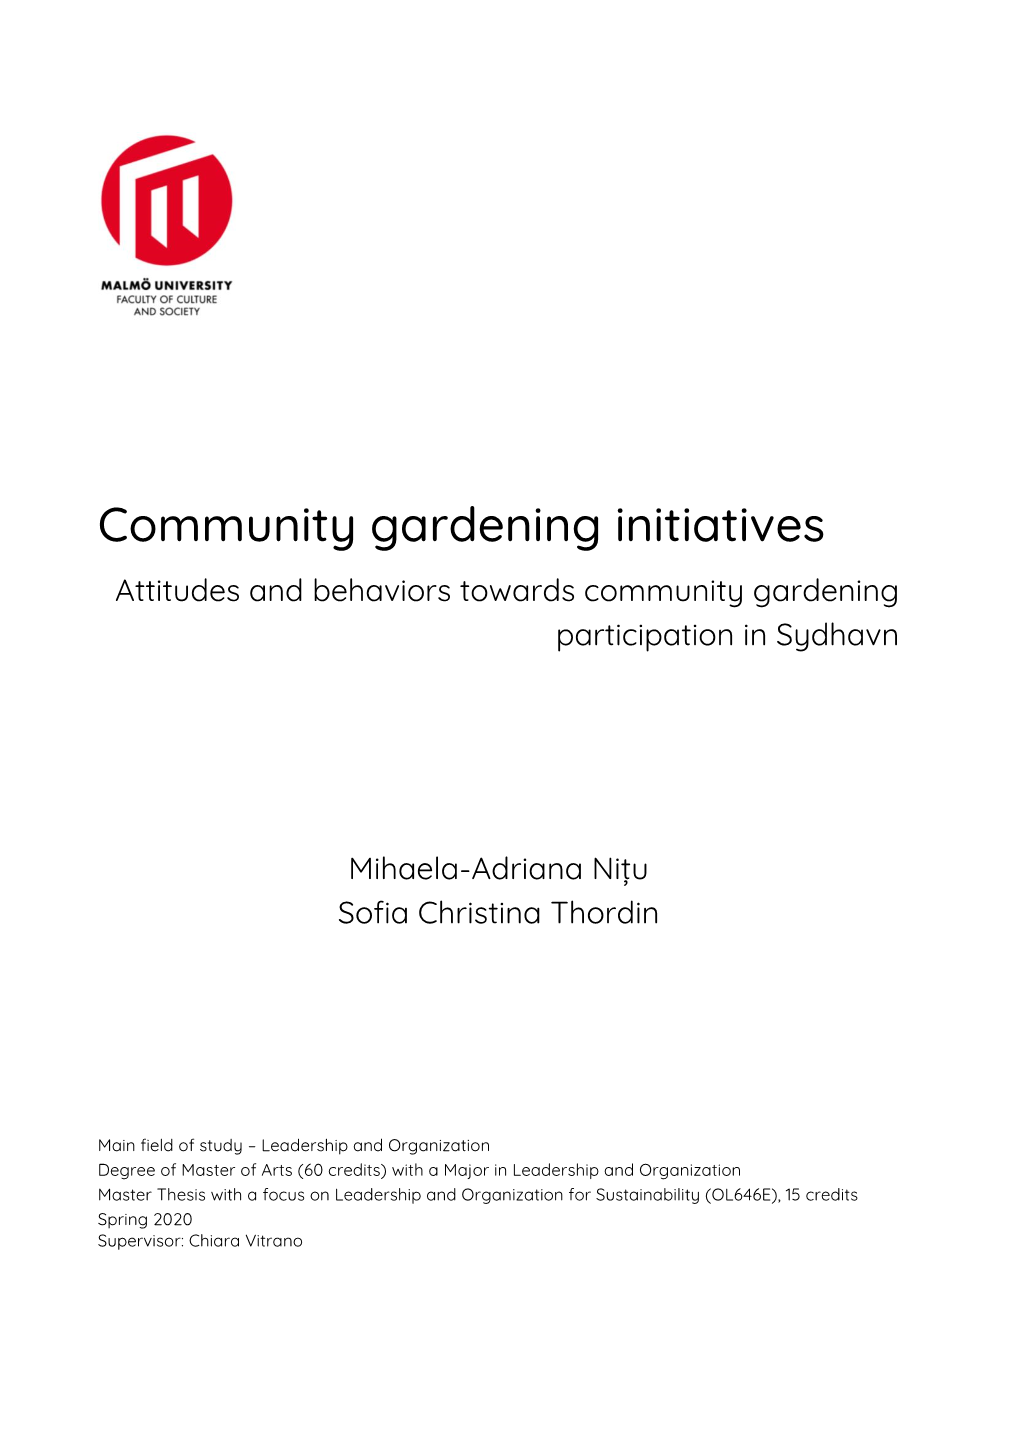 Community Gardening Initiatives Attitudes and Behaviors Towards Community Gardening Participation in Sydhavn